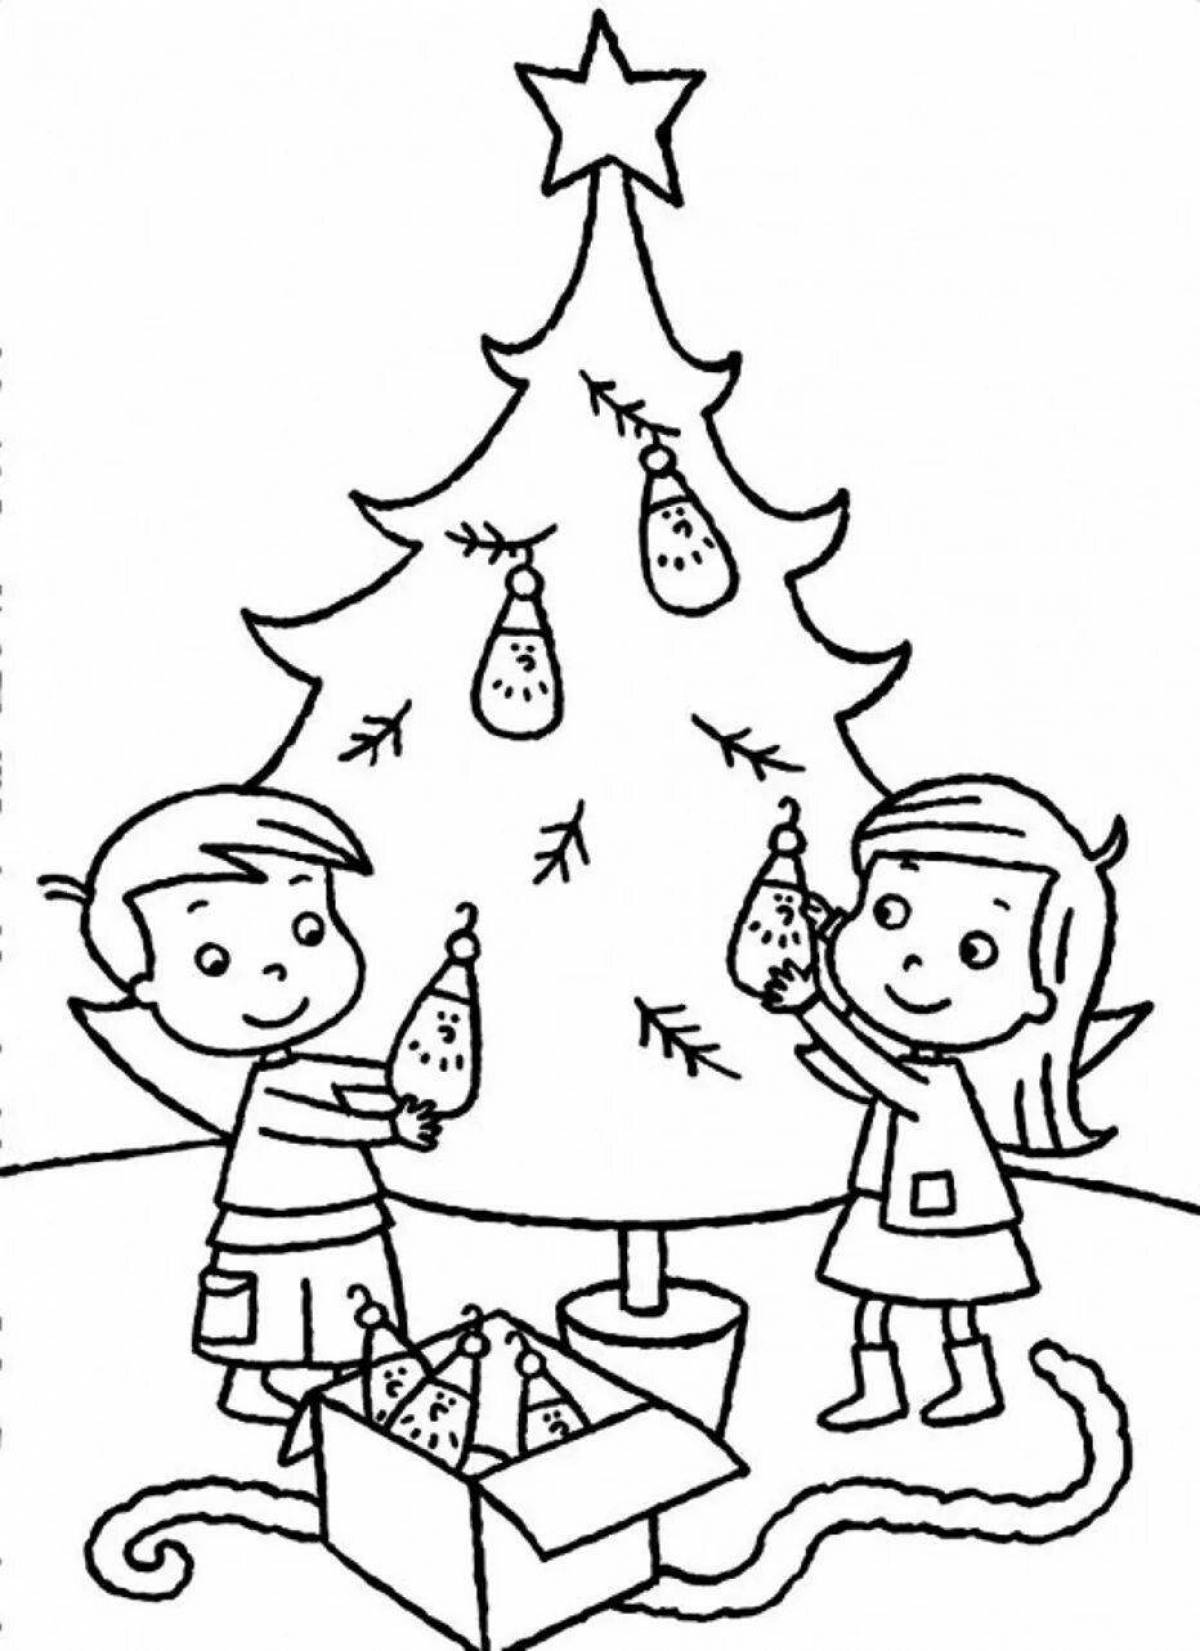 Children decorate the Christmas tree #2